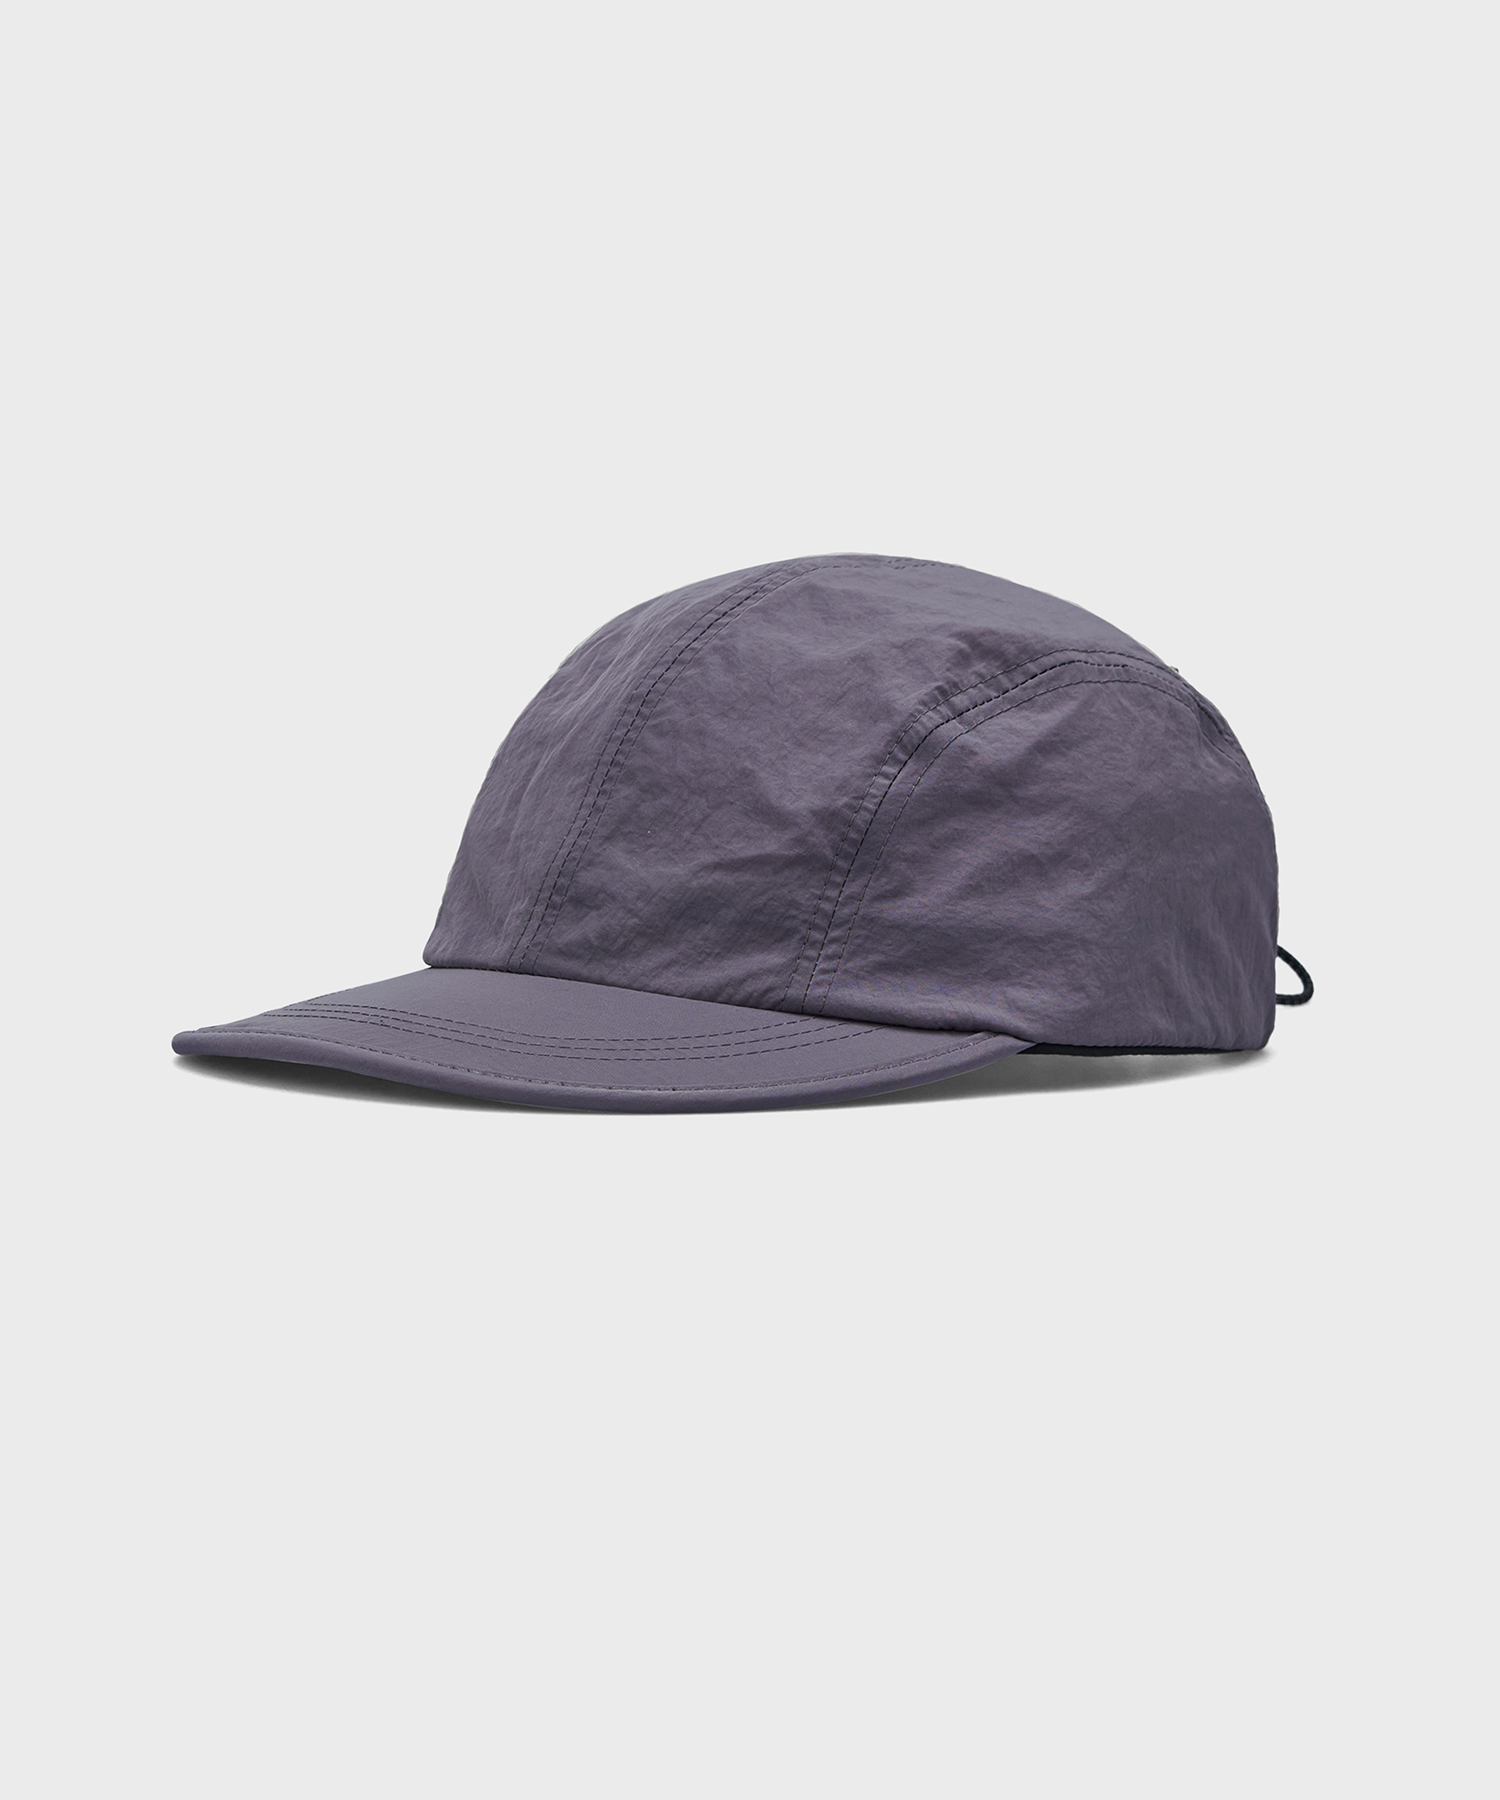 TY signature cap_Purple gray